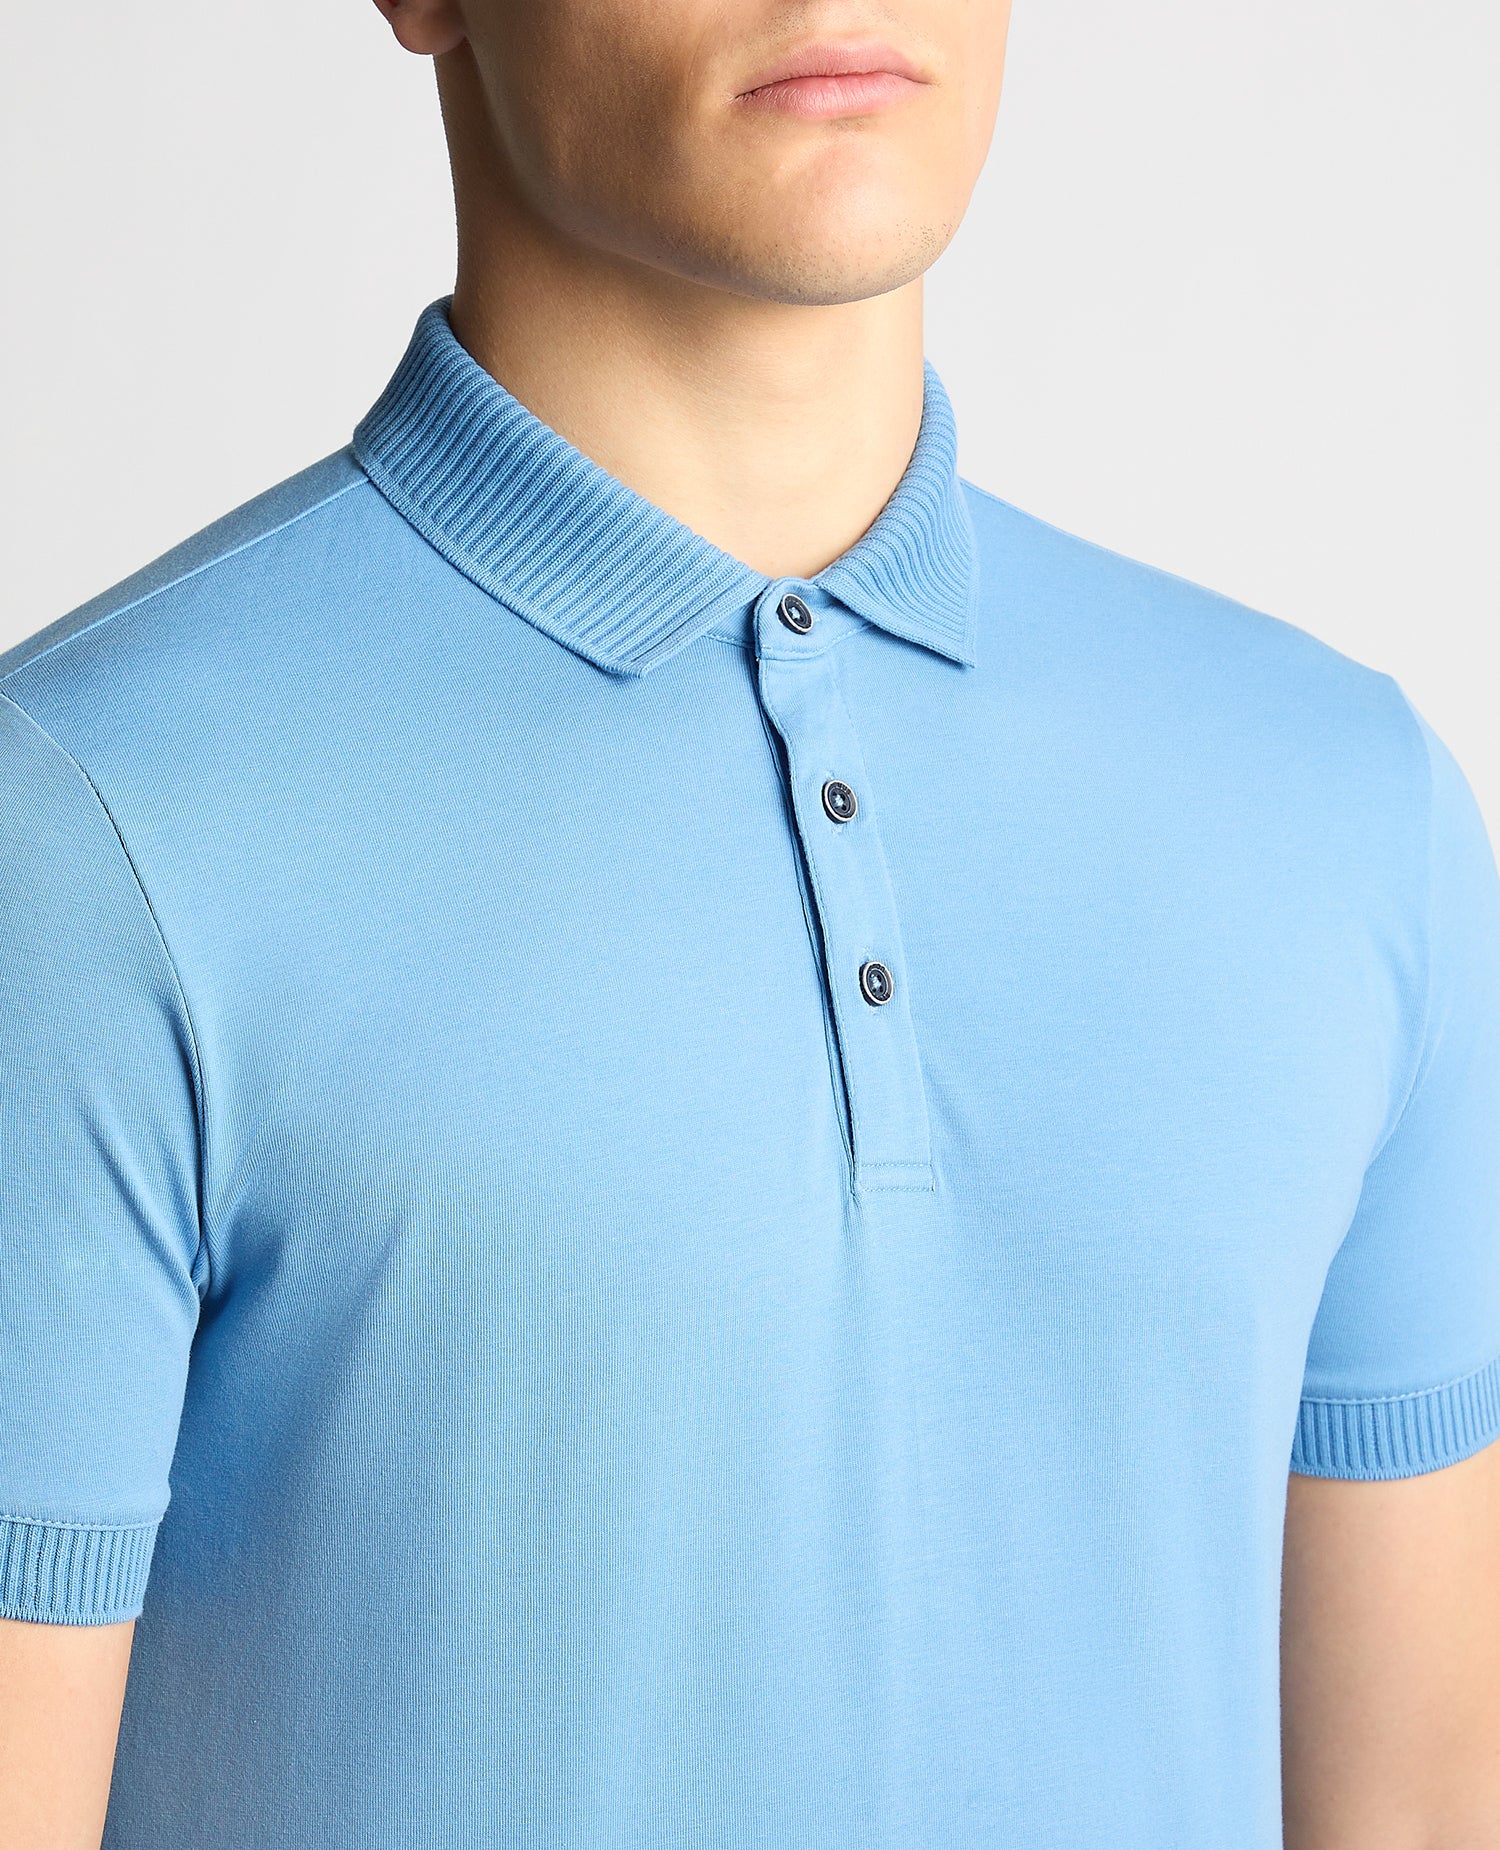 Remus Uomo Short Sleeved Polo Shirt - Riviera Blue